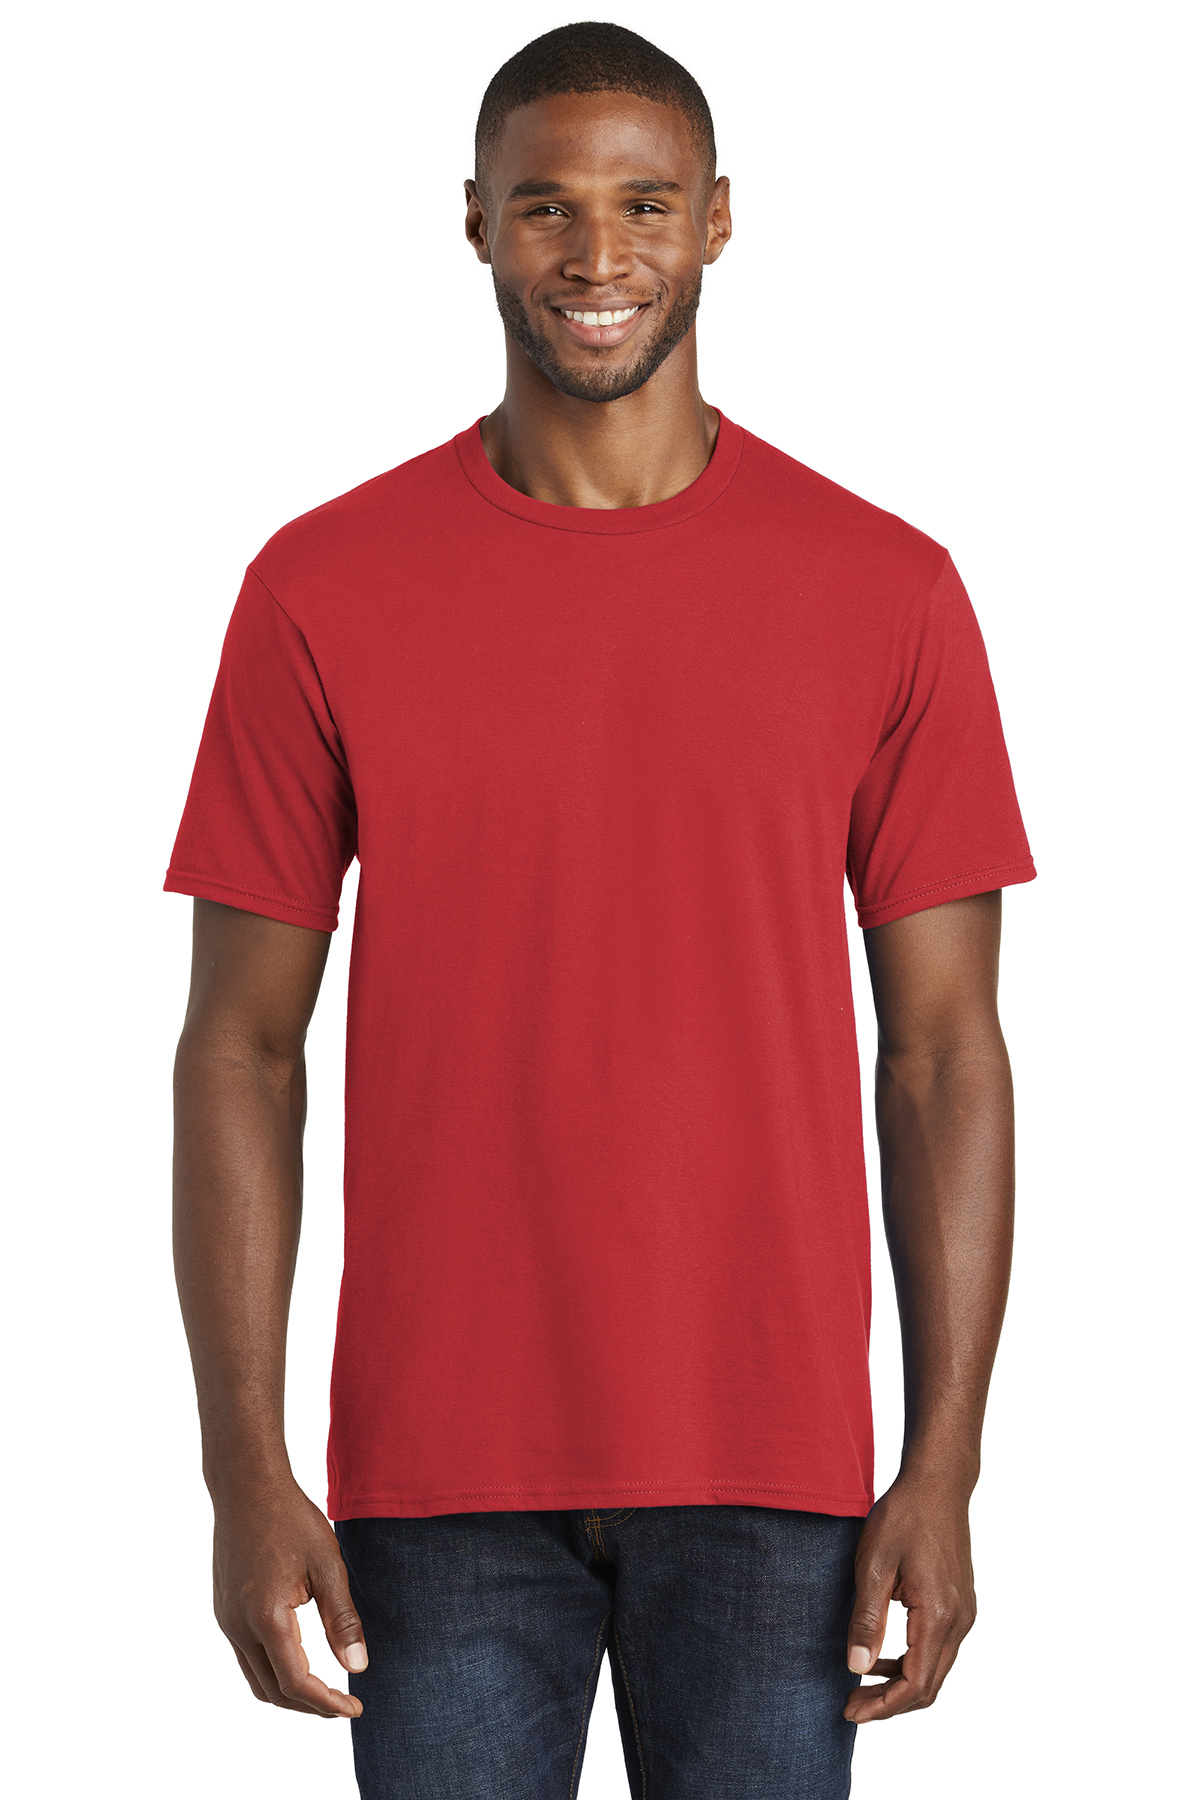 red shirt company